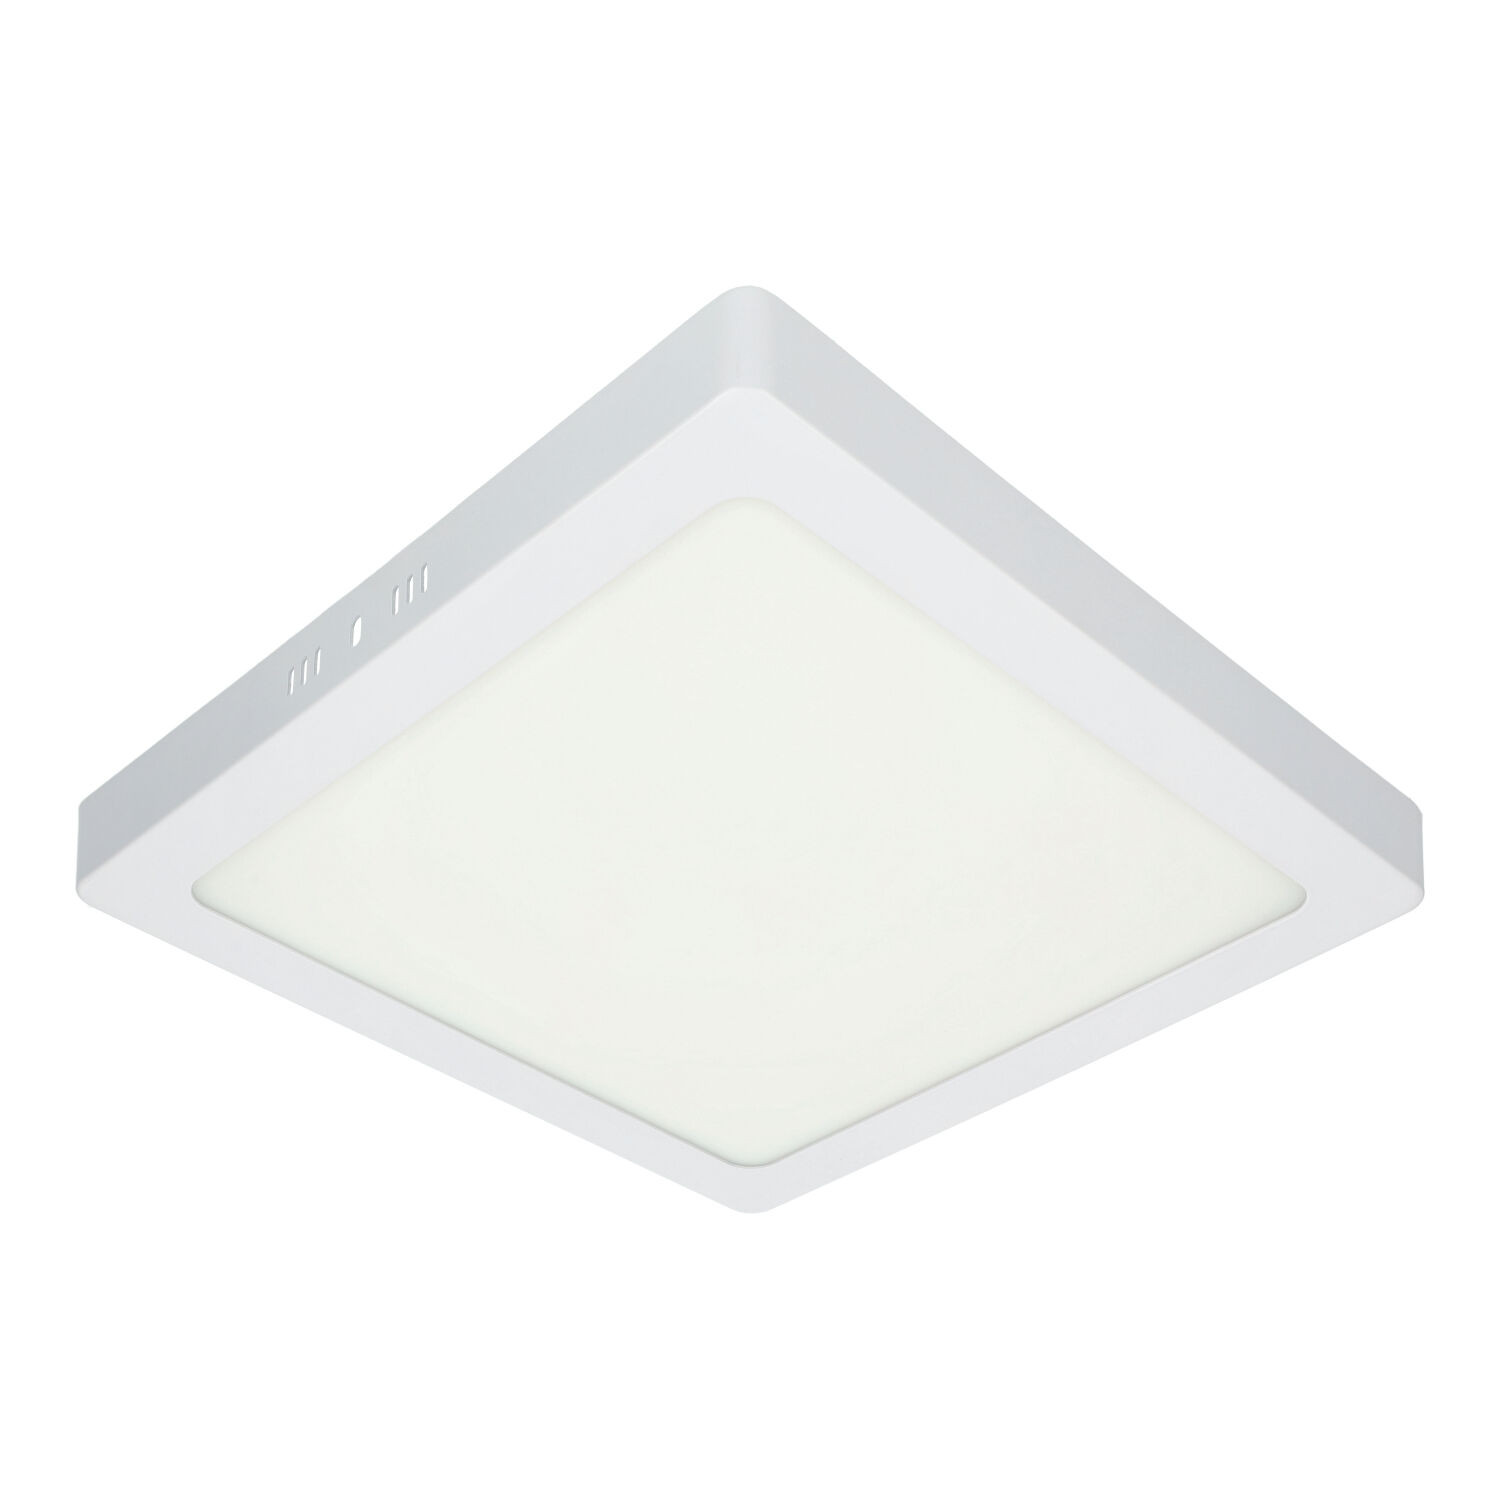 LED Ceiling Light - Square,...